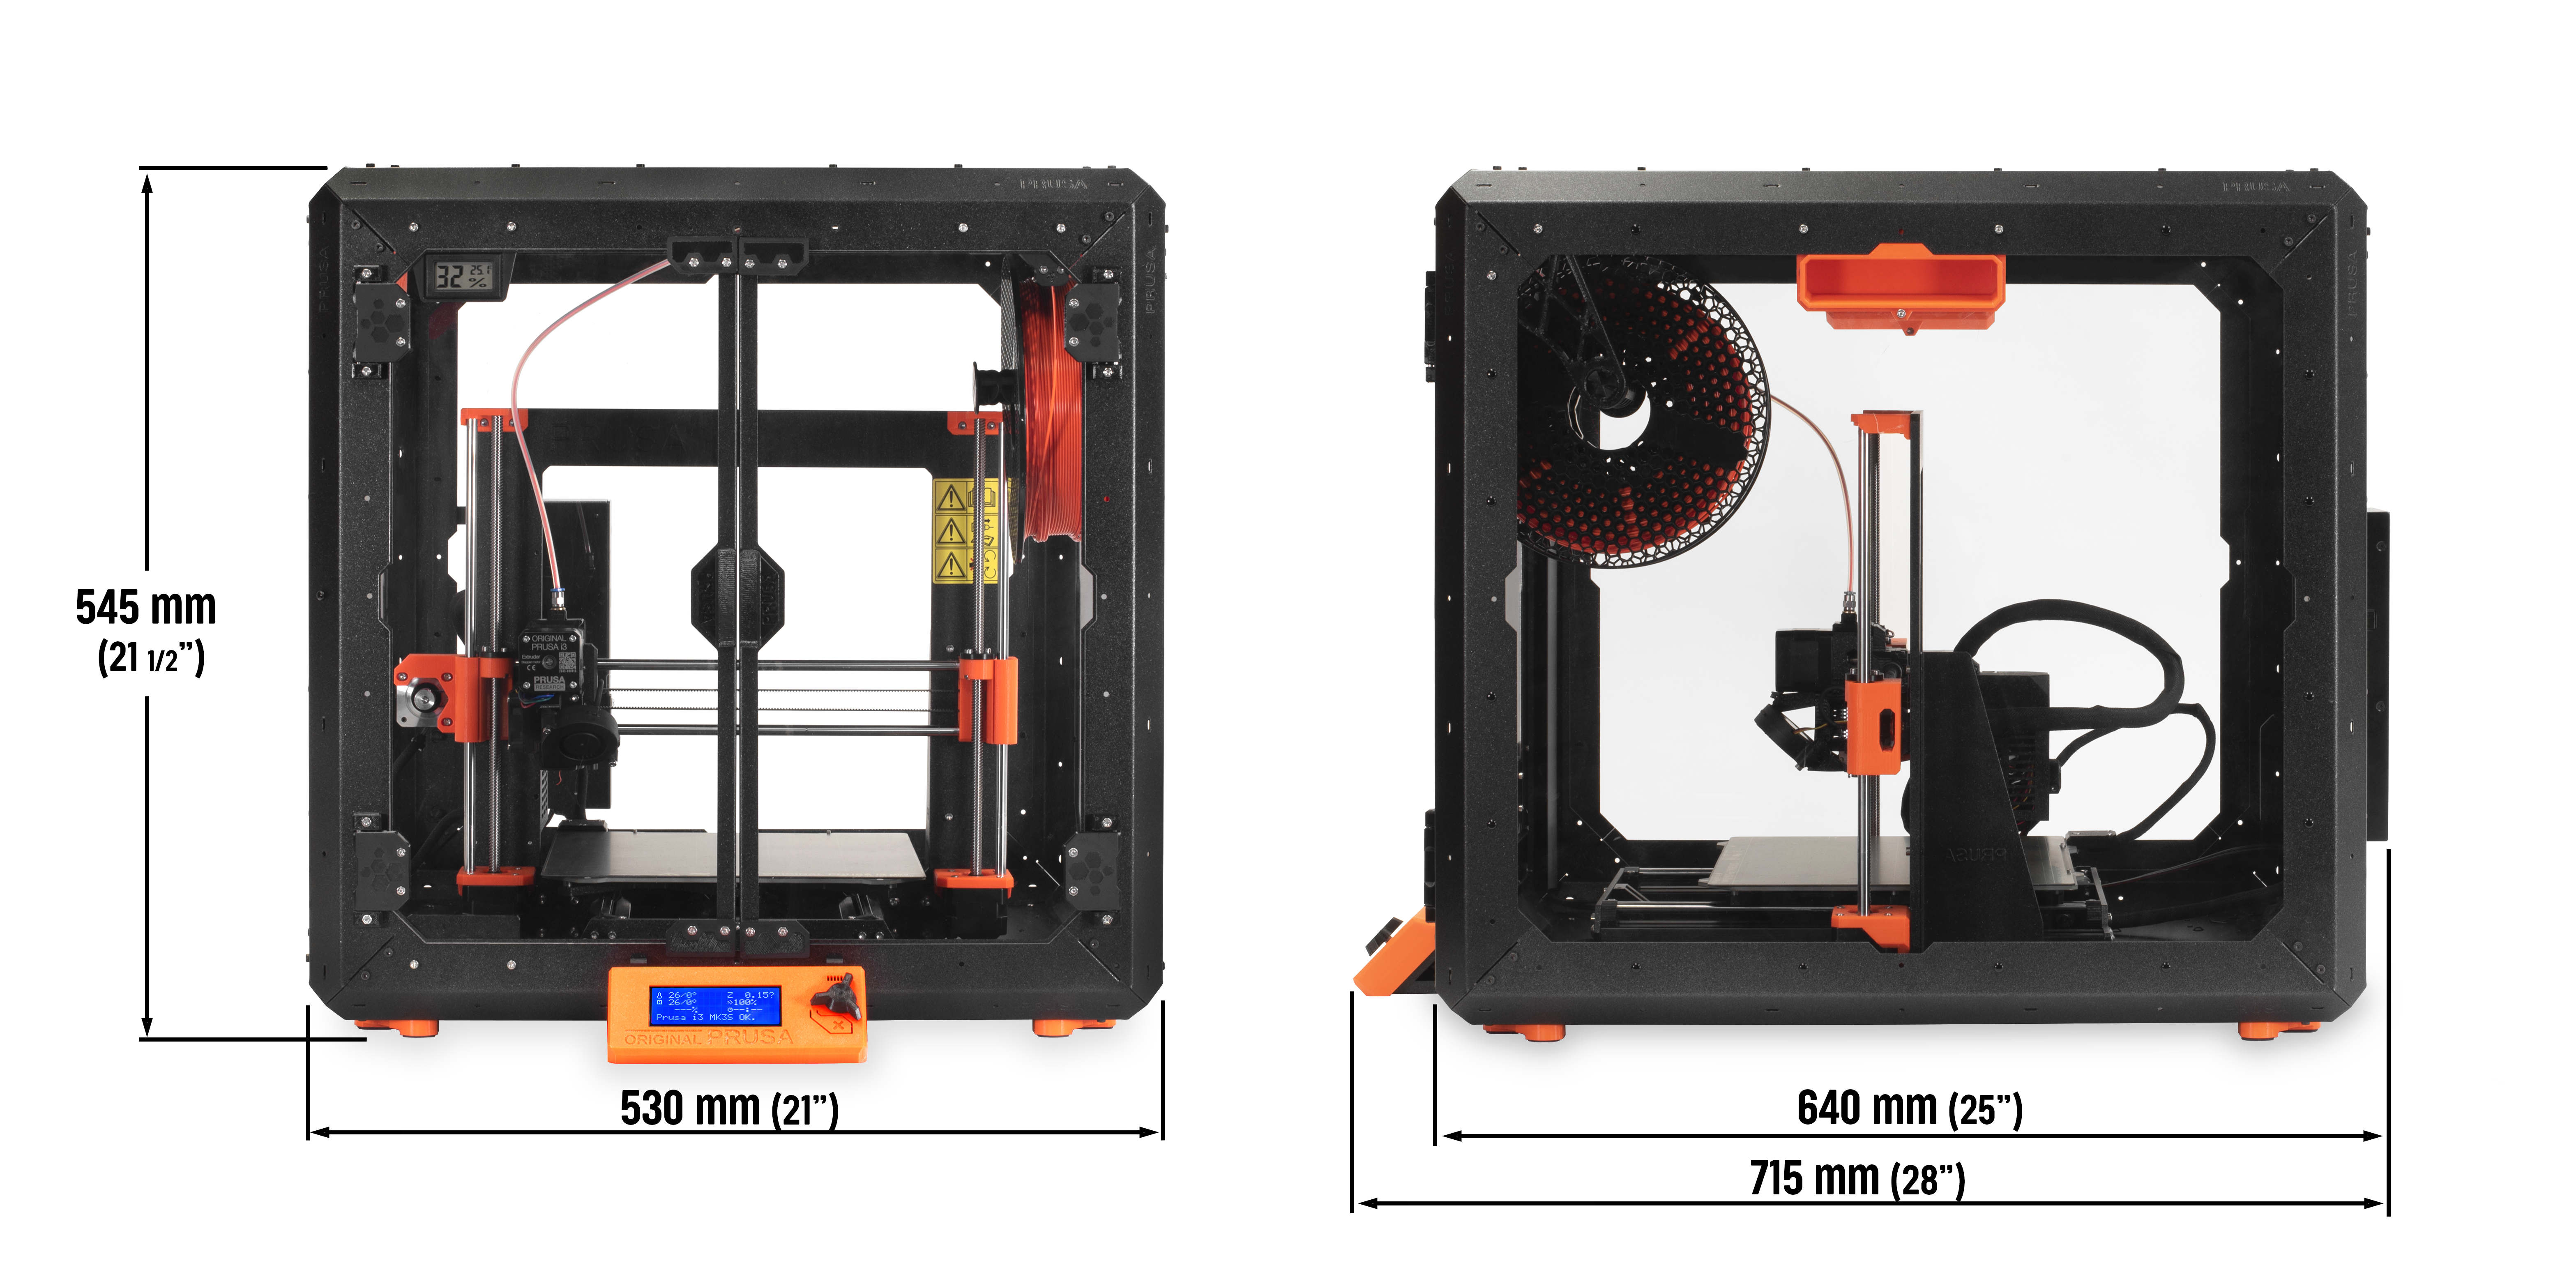 Threaded inserts - M3 standard 100 pcs  Original Prusa 3D printers  directly from Josef Prusa